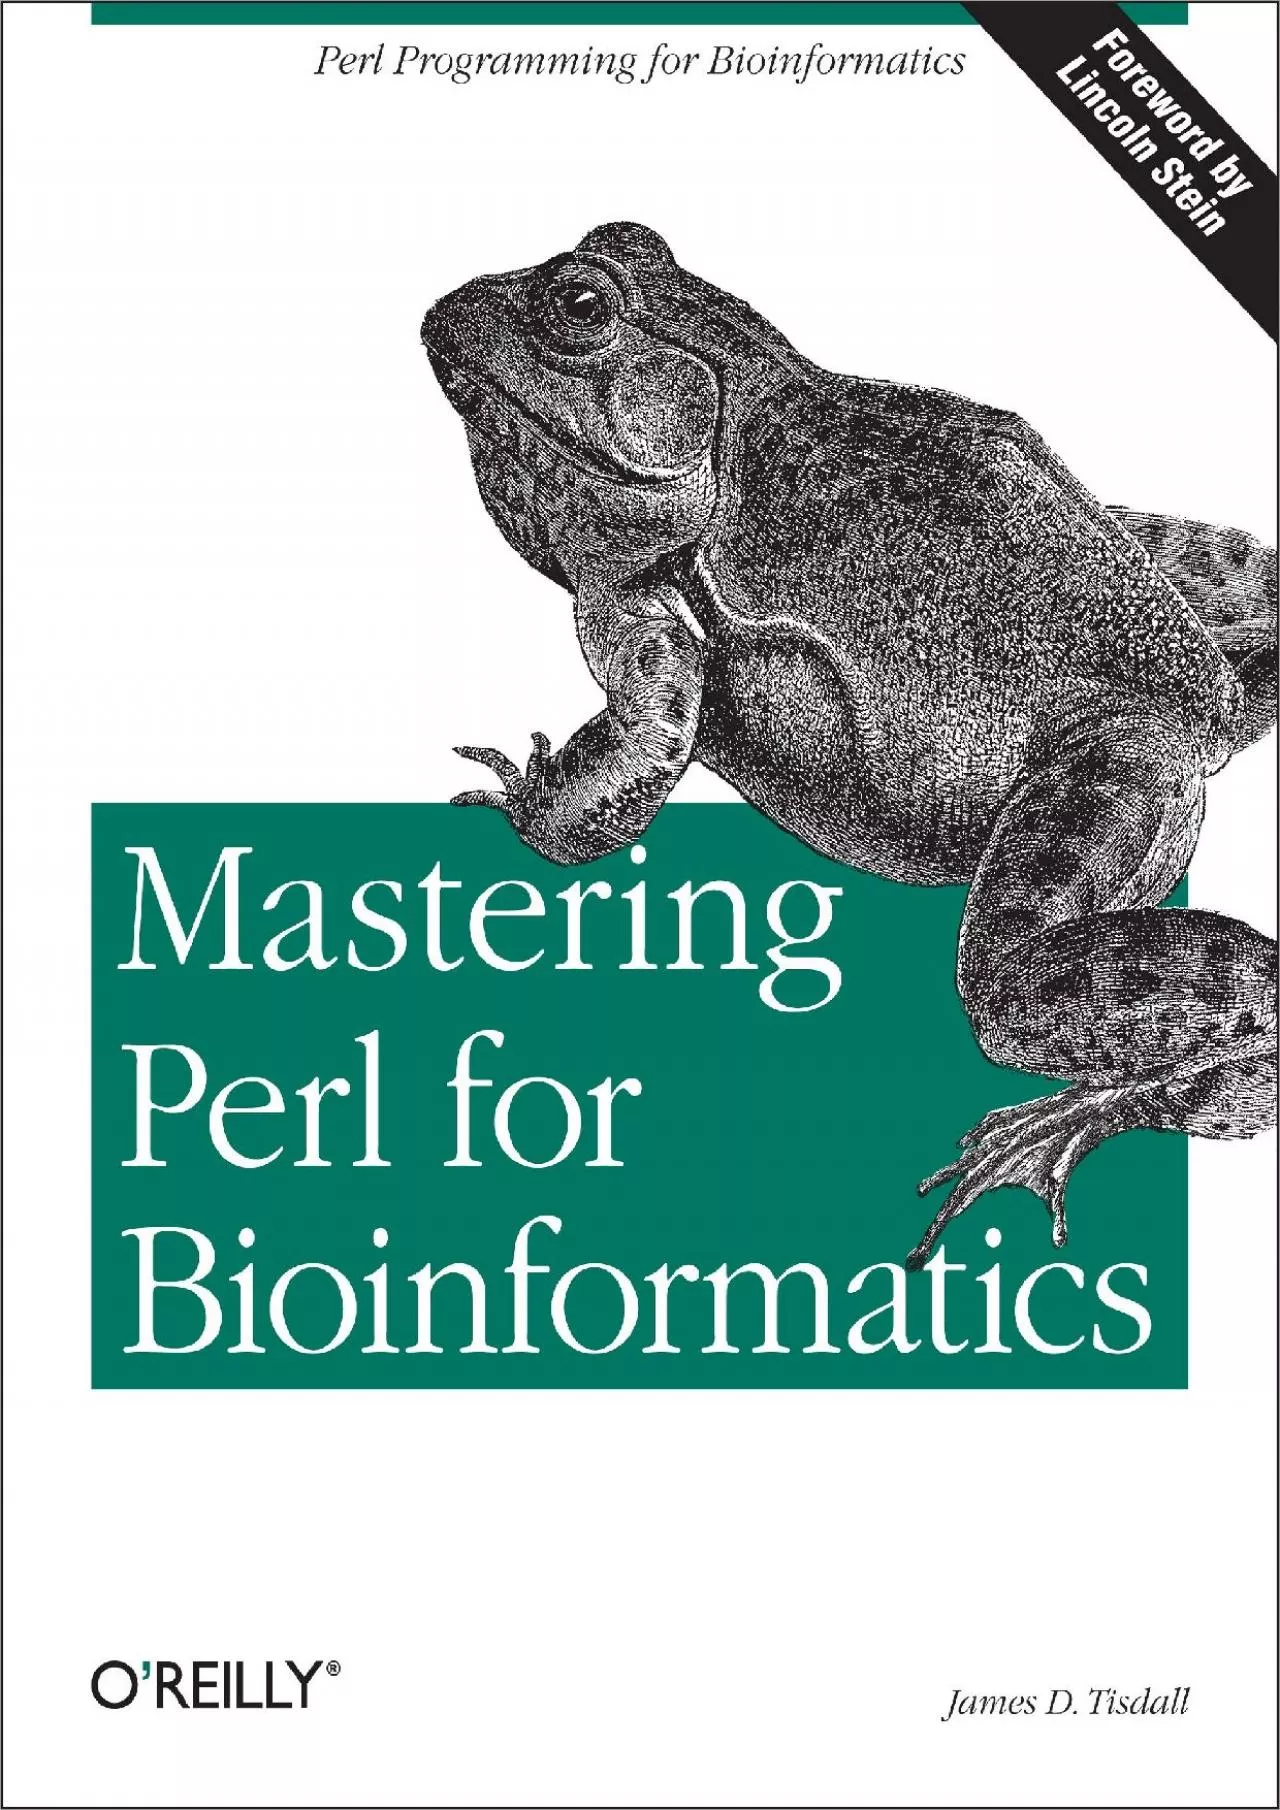 [READING BOOK]-Mastering Perl for Bioinformatics: Perl Programming for Bioinformatics